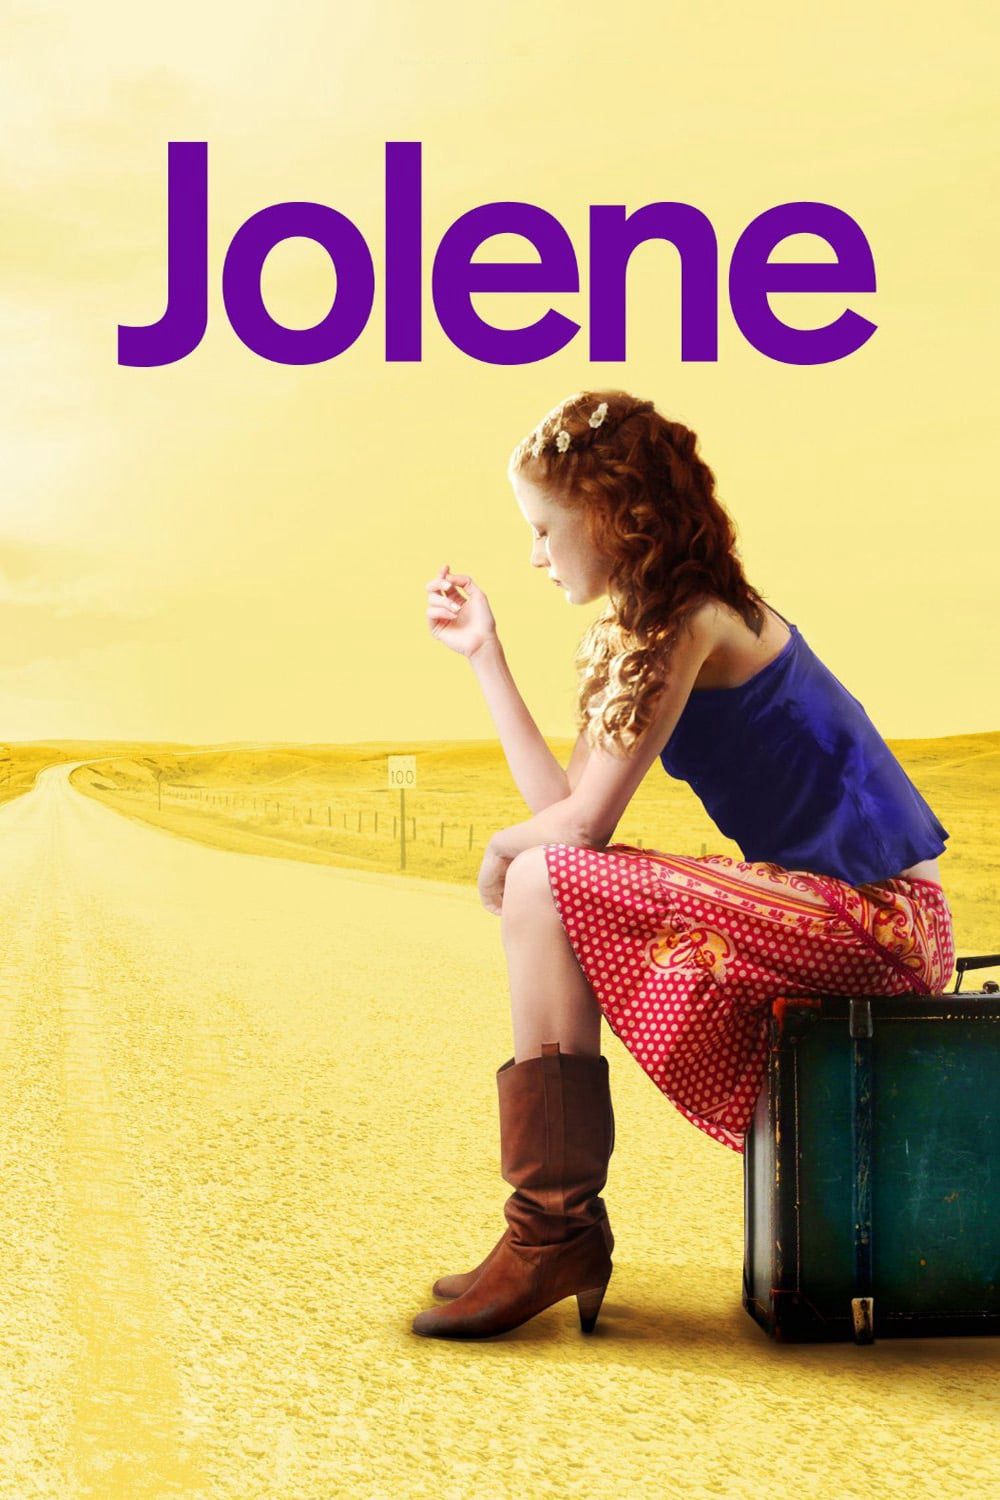 Banner Phim Cuộc Đời Của Jolene (Jolene)